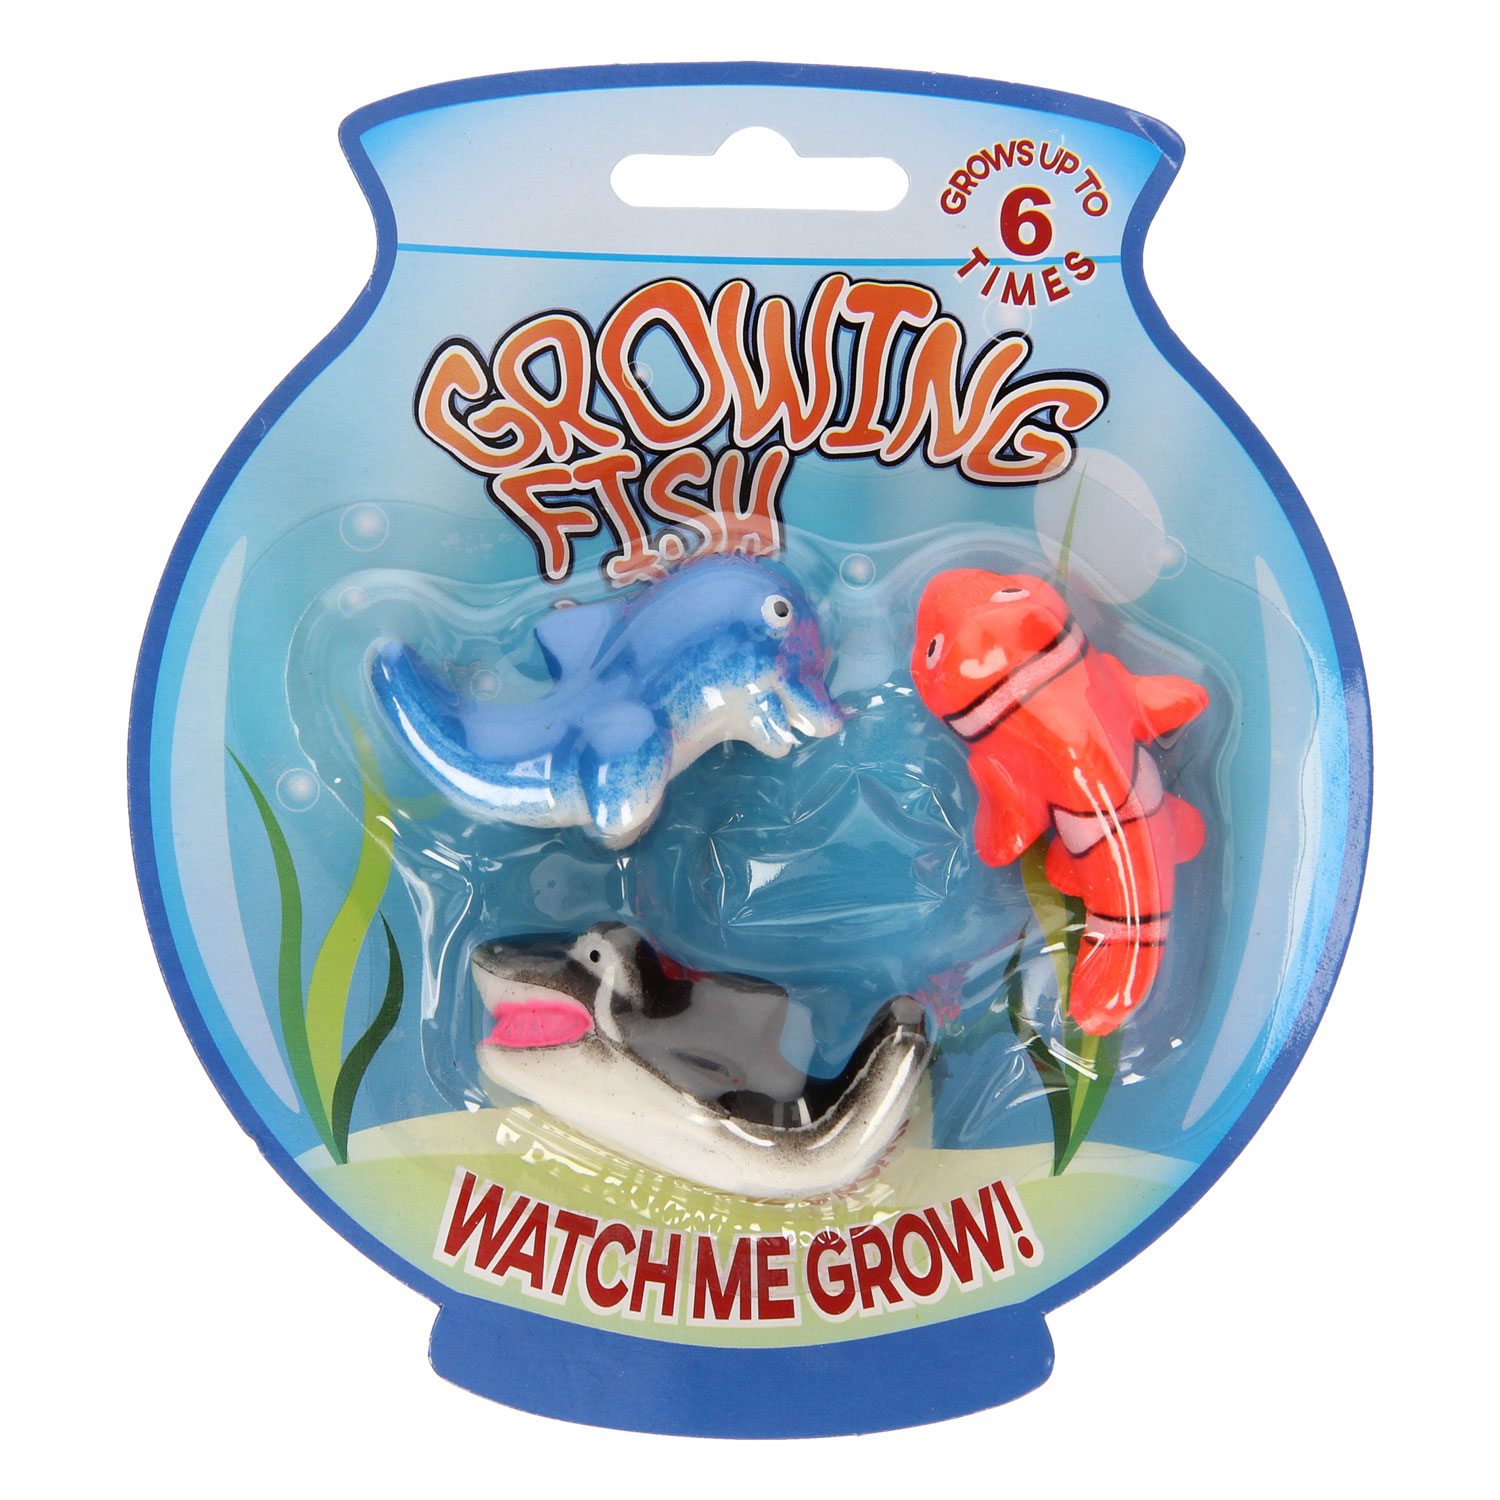 3 Growing Aquarium Toy for Kids - Set of 3 - Fish Grow 5X Bigger in W ·  Art Creativity